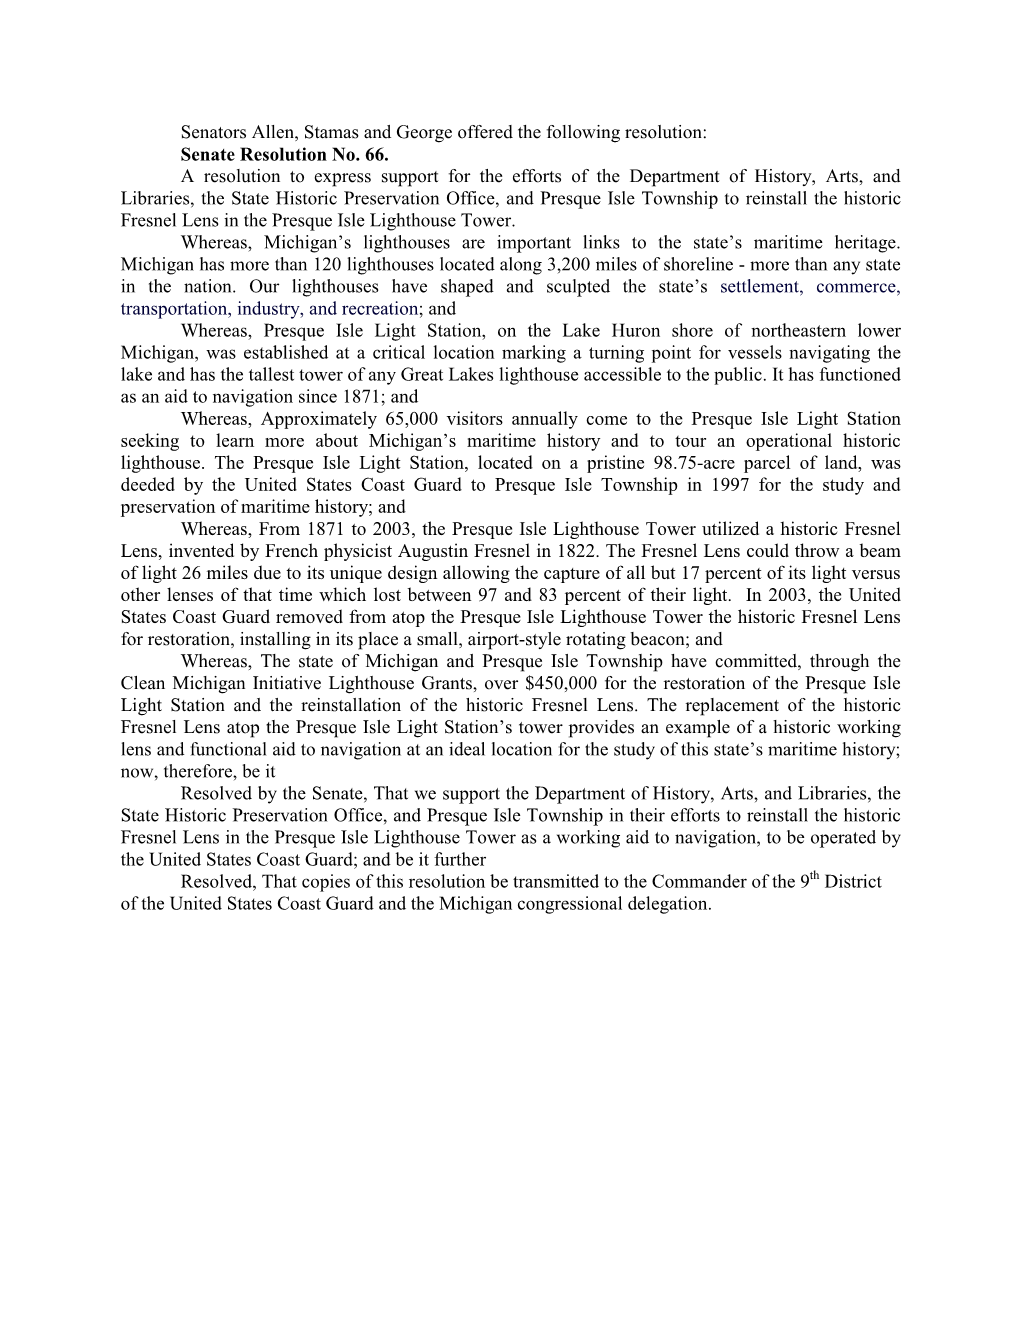 Senators Allen, Stamas and George Offered the Following Resolution: Senate Resolution No